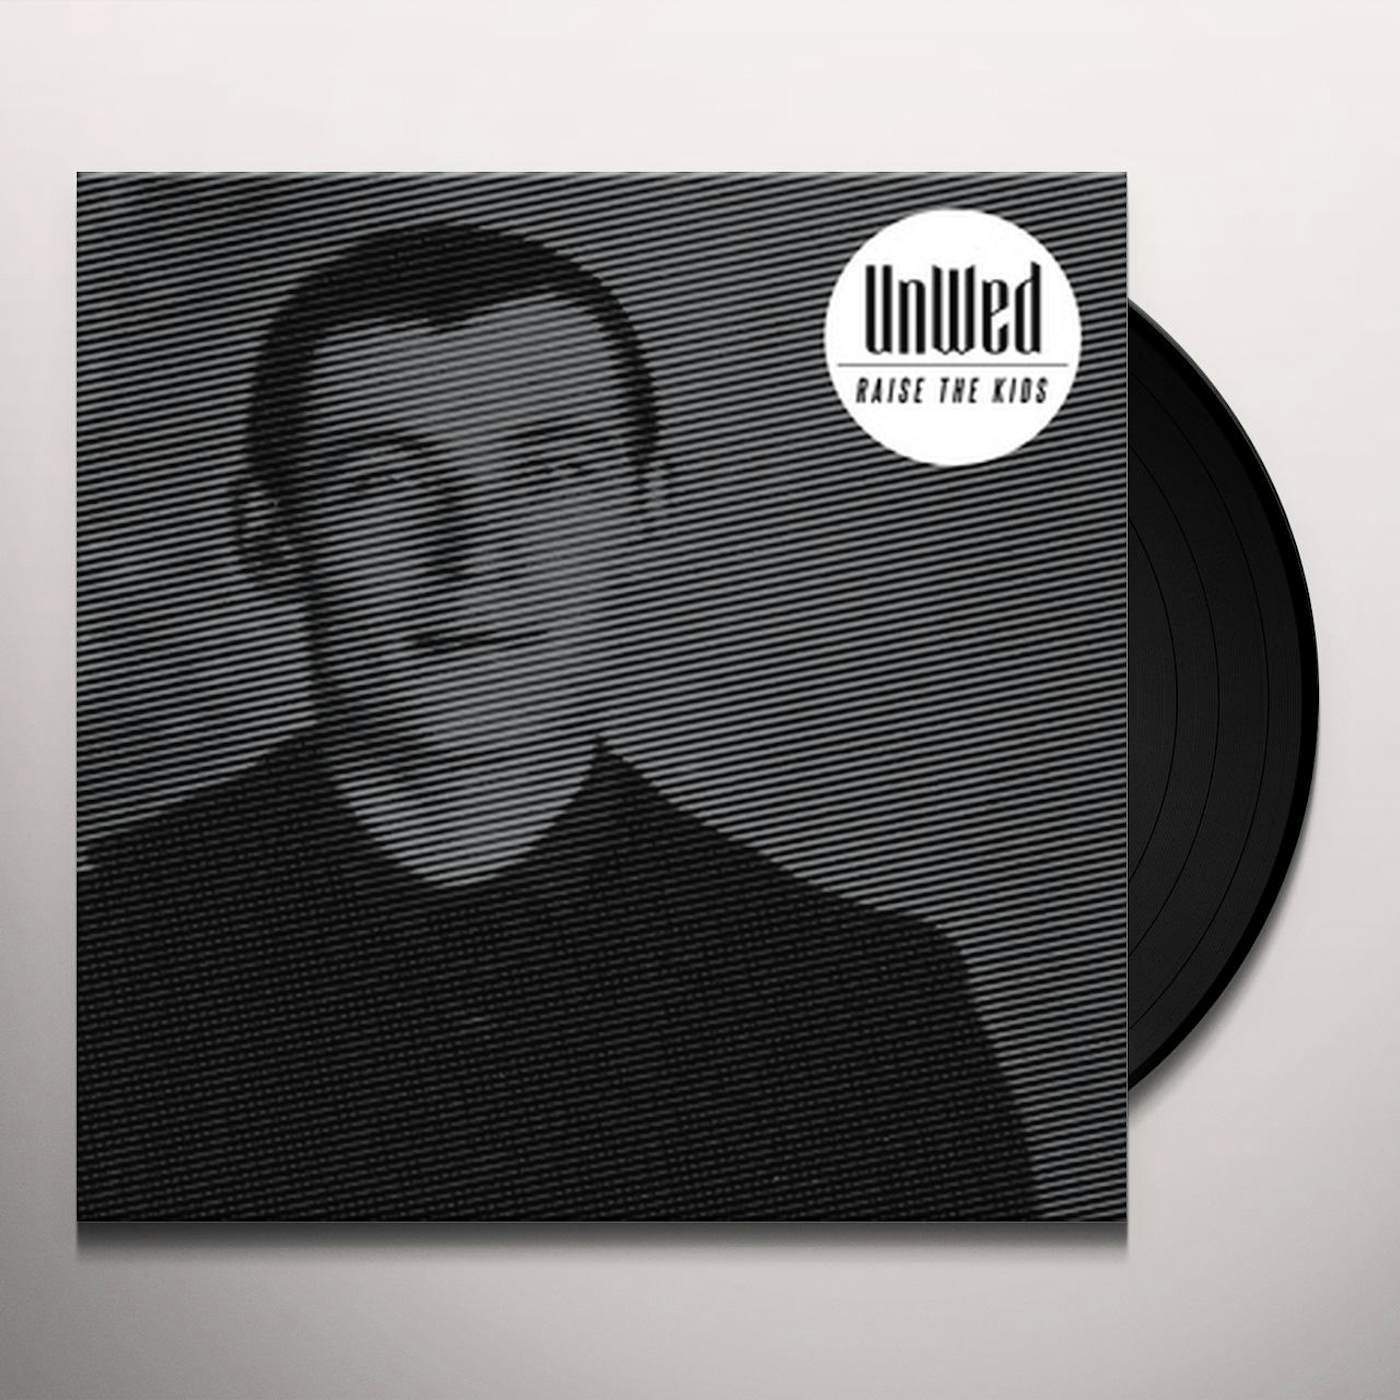 UnWed Raise the Kids Vinyl Record